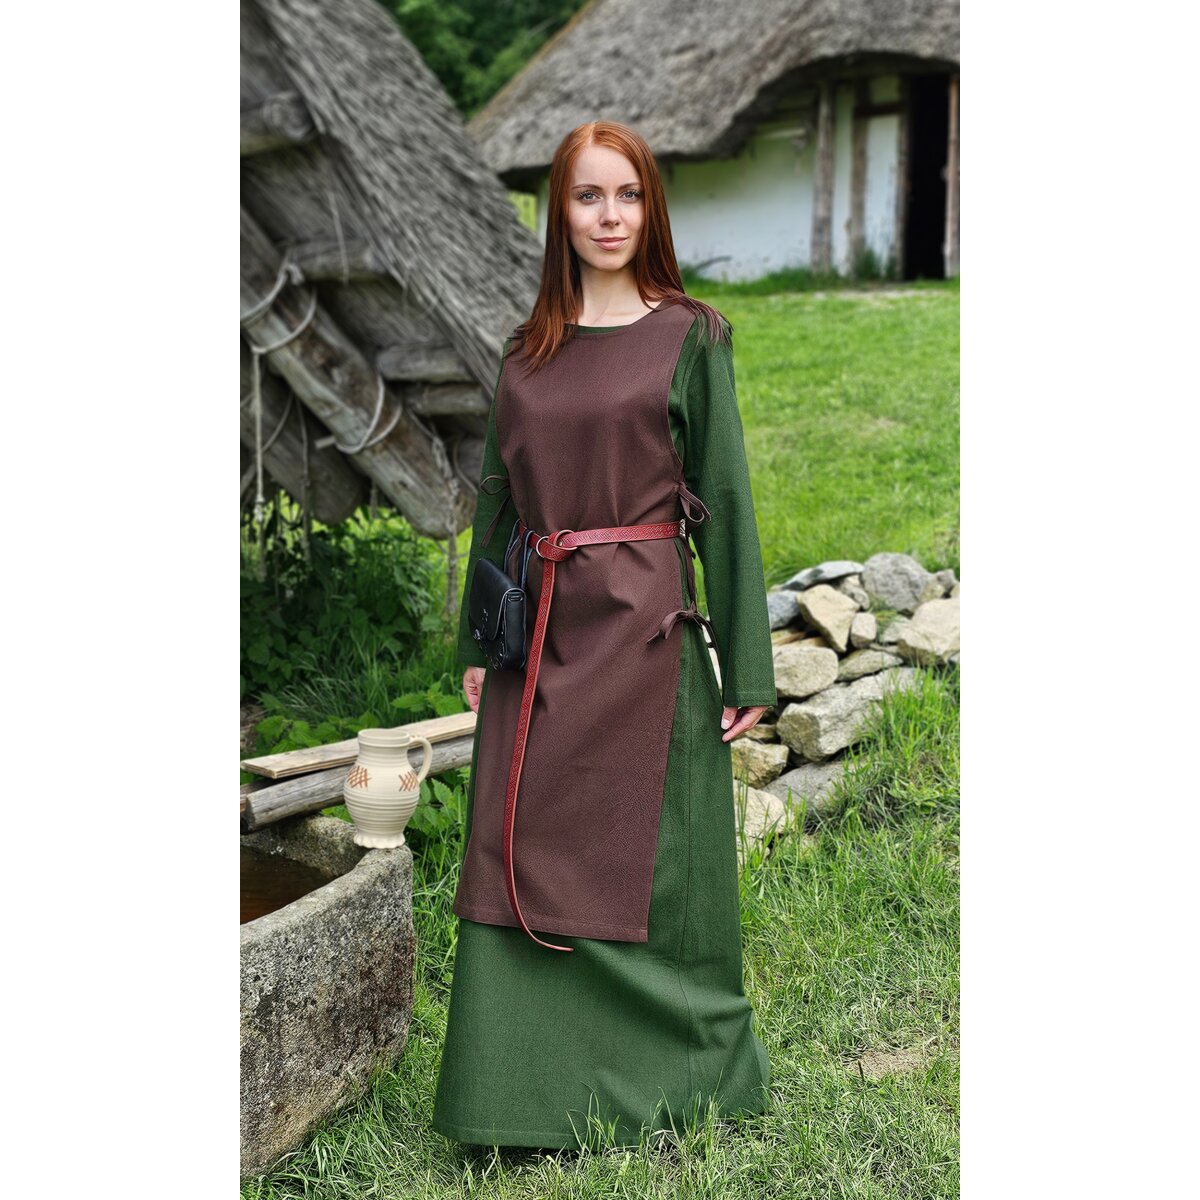 Sur-robe viking classique brune "Lykke"